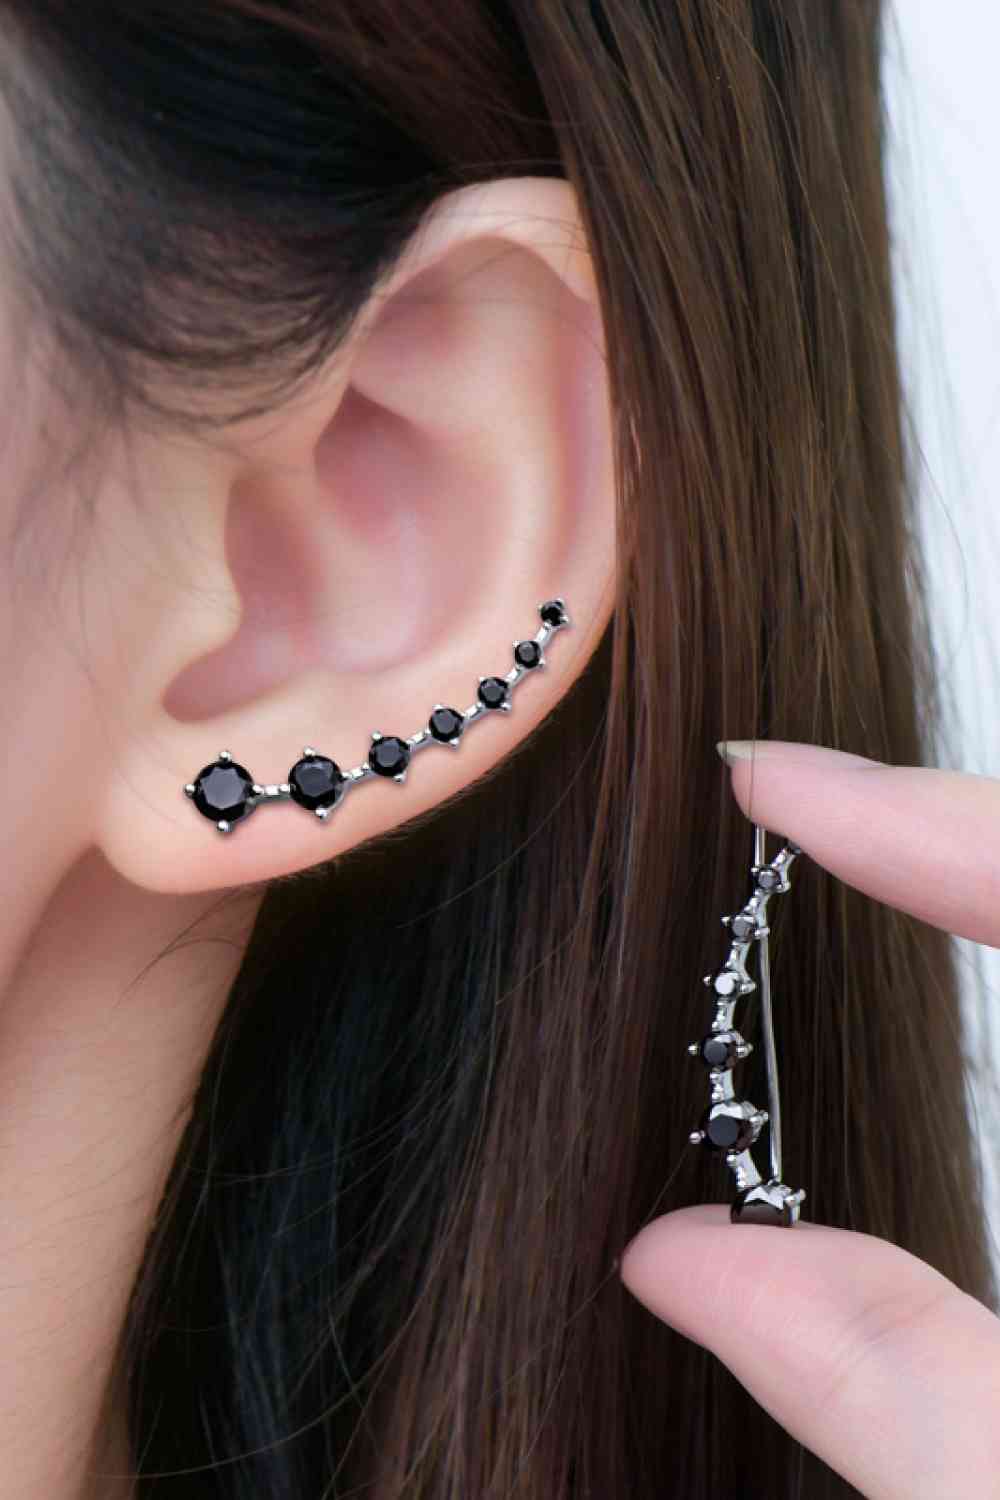 a woman wearing a black diamond ear cuff